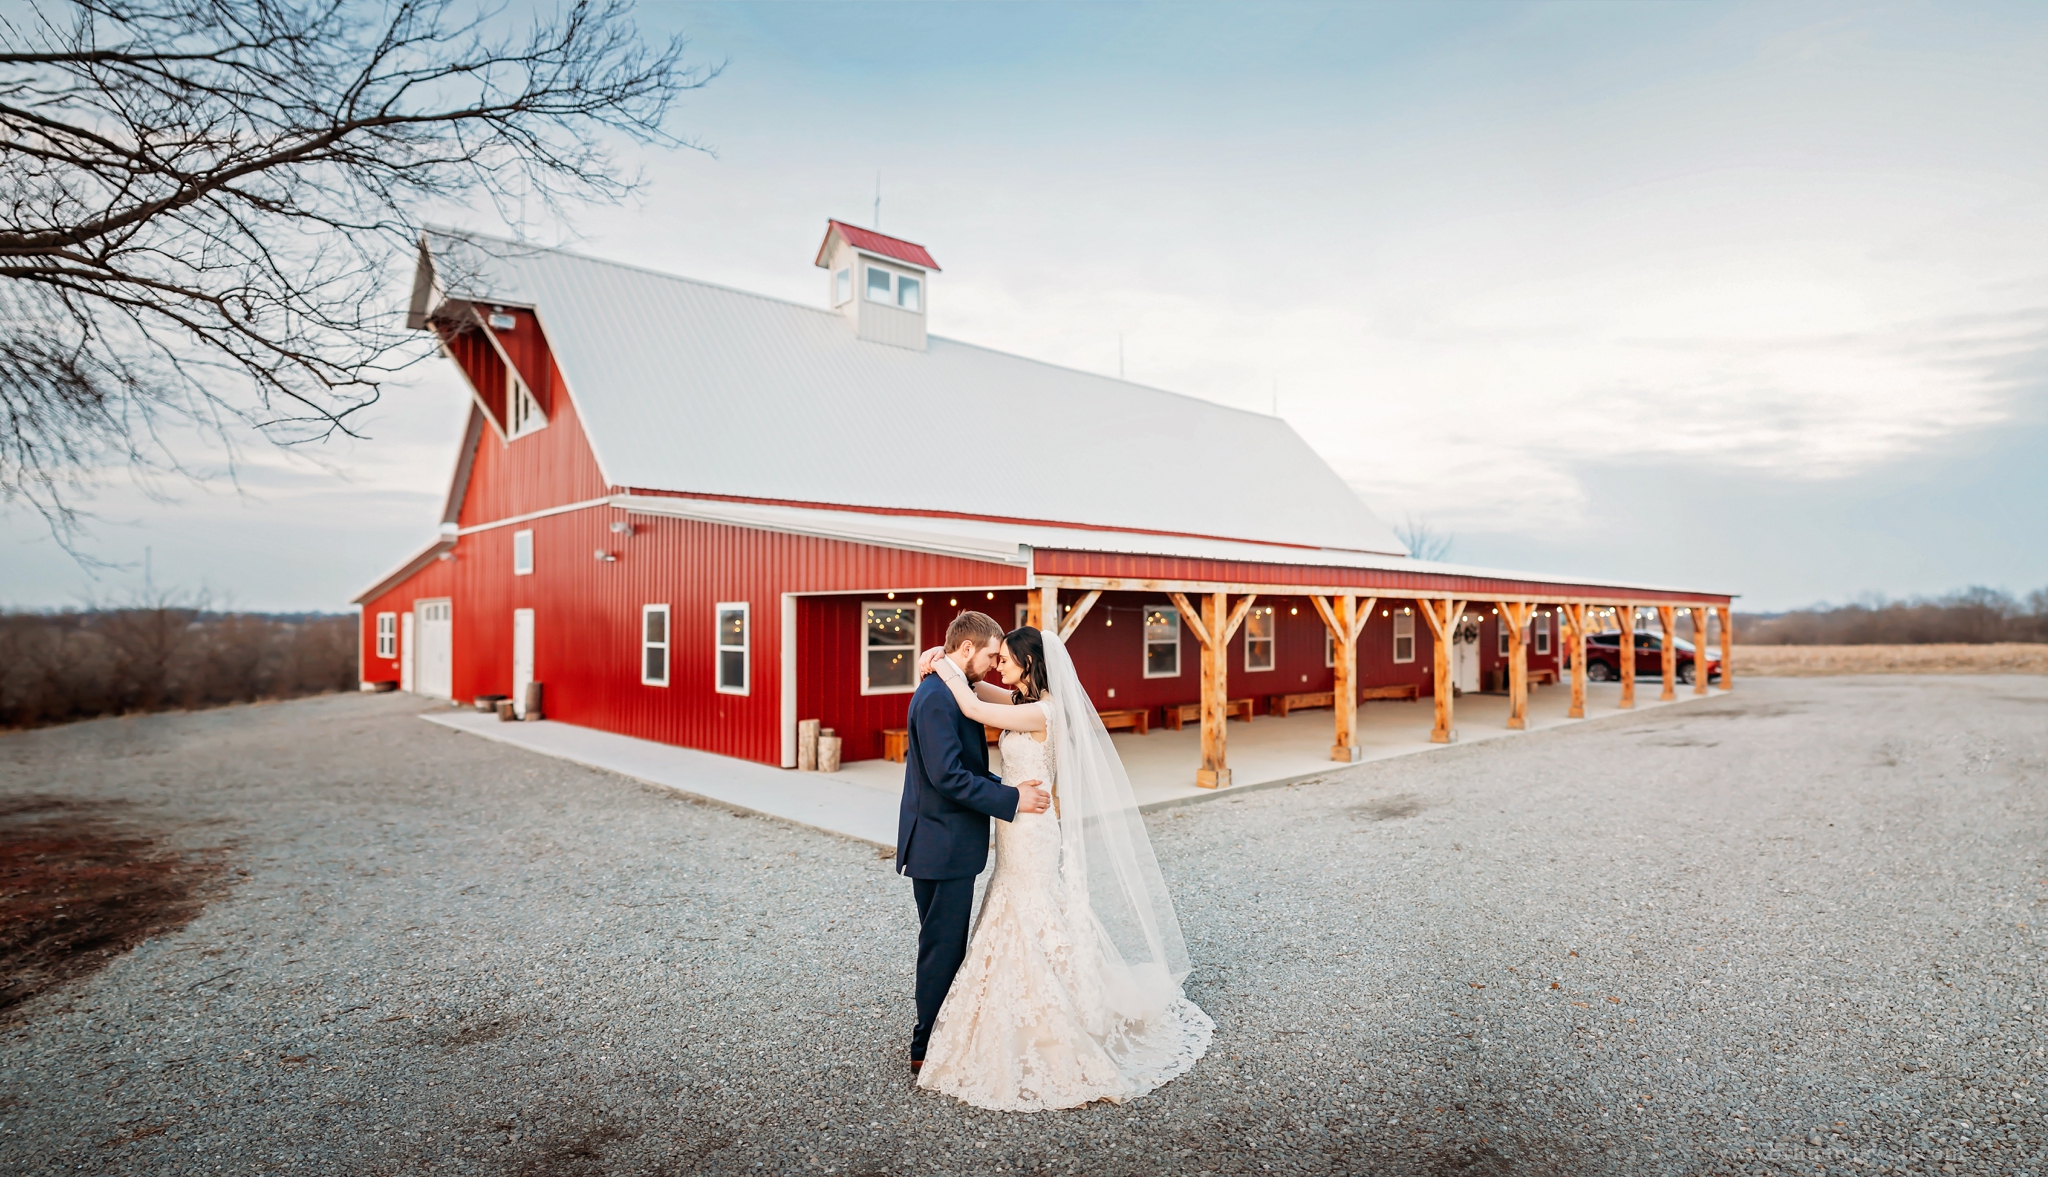 modern rustic barn wedding red cedars event barn brittany jewell photography